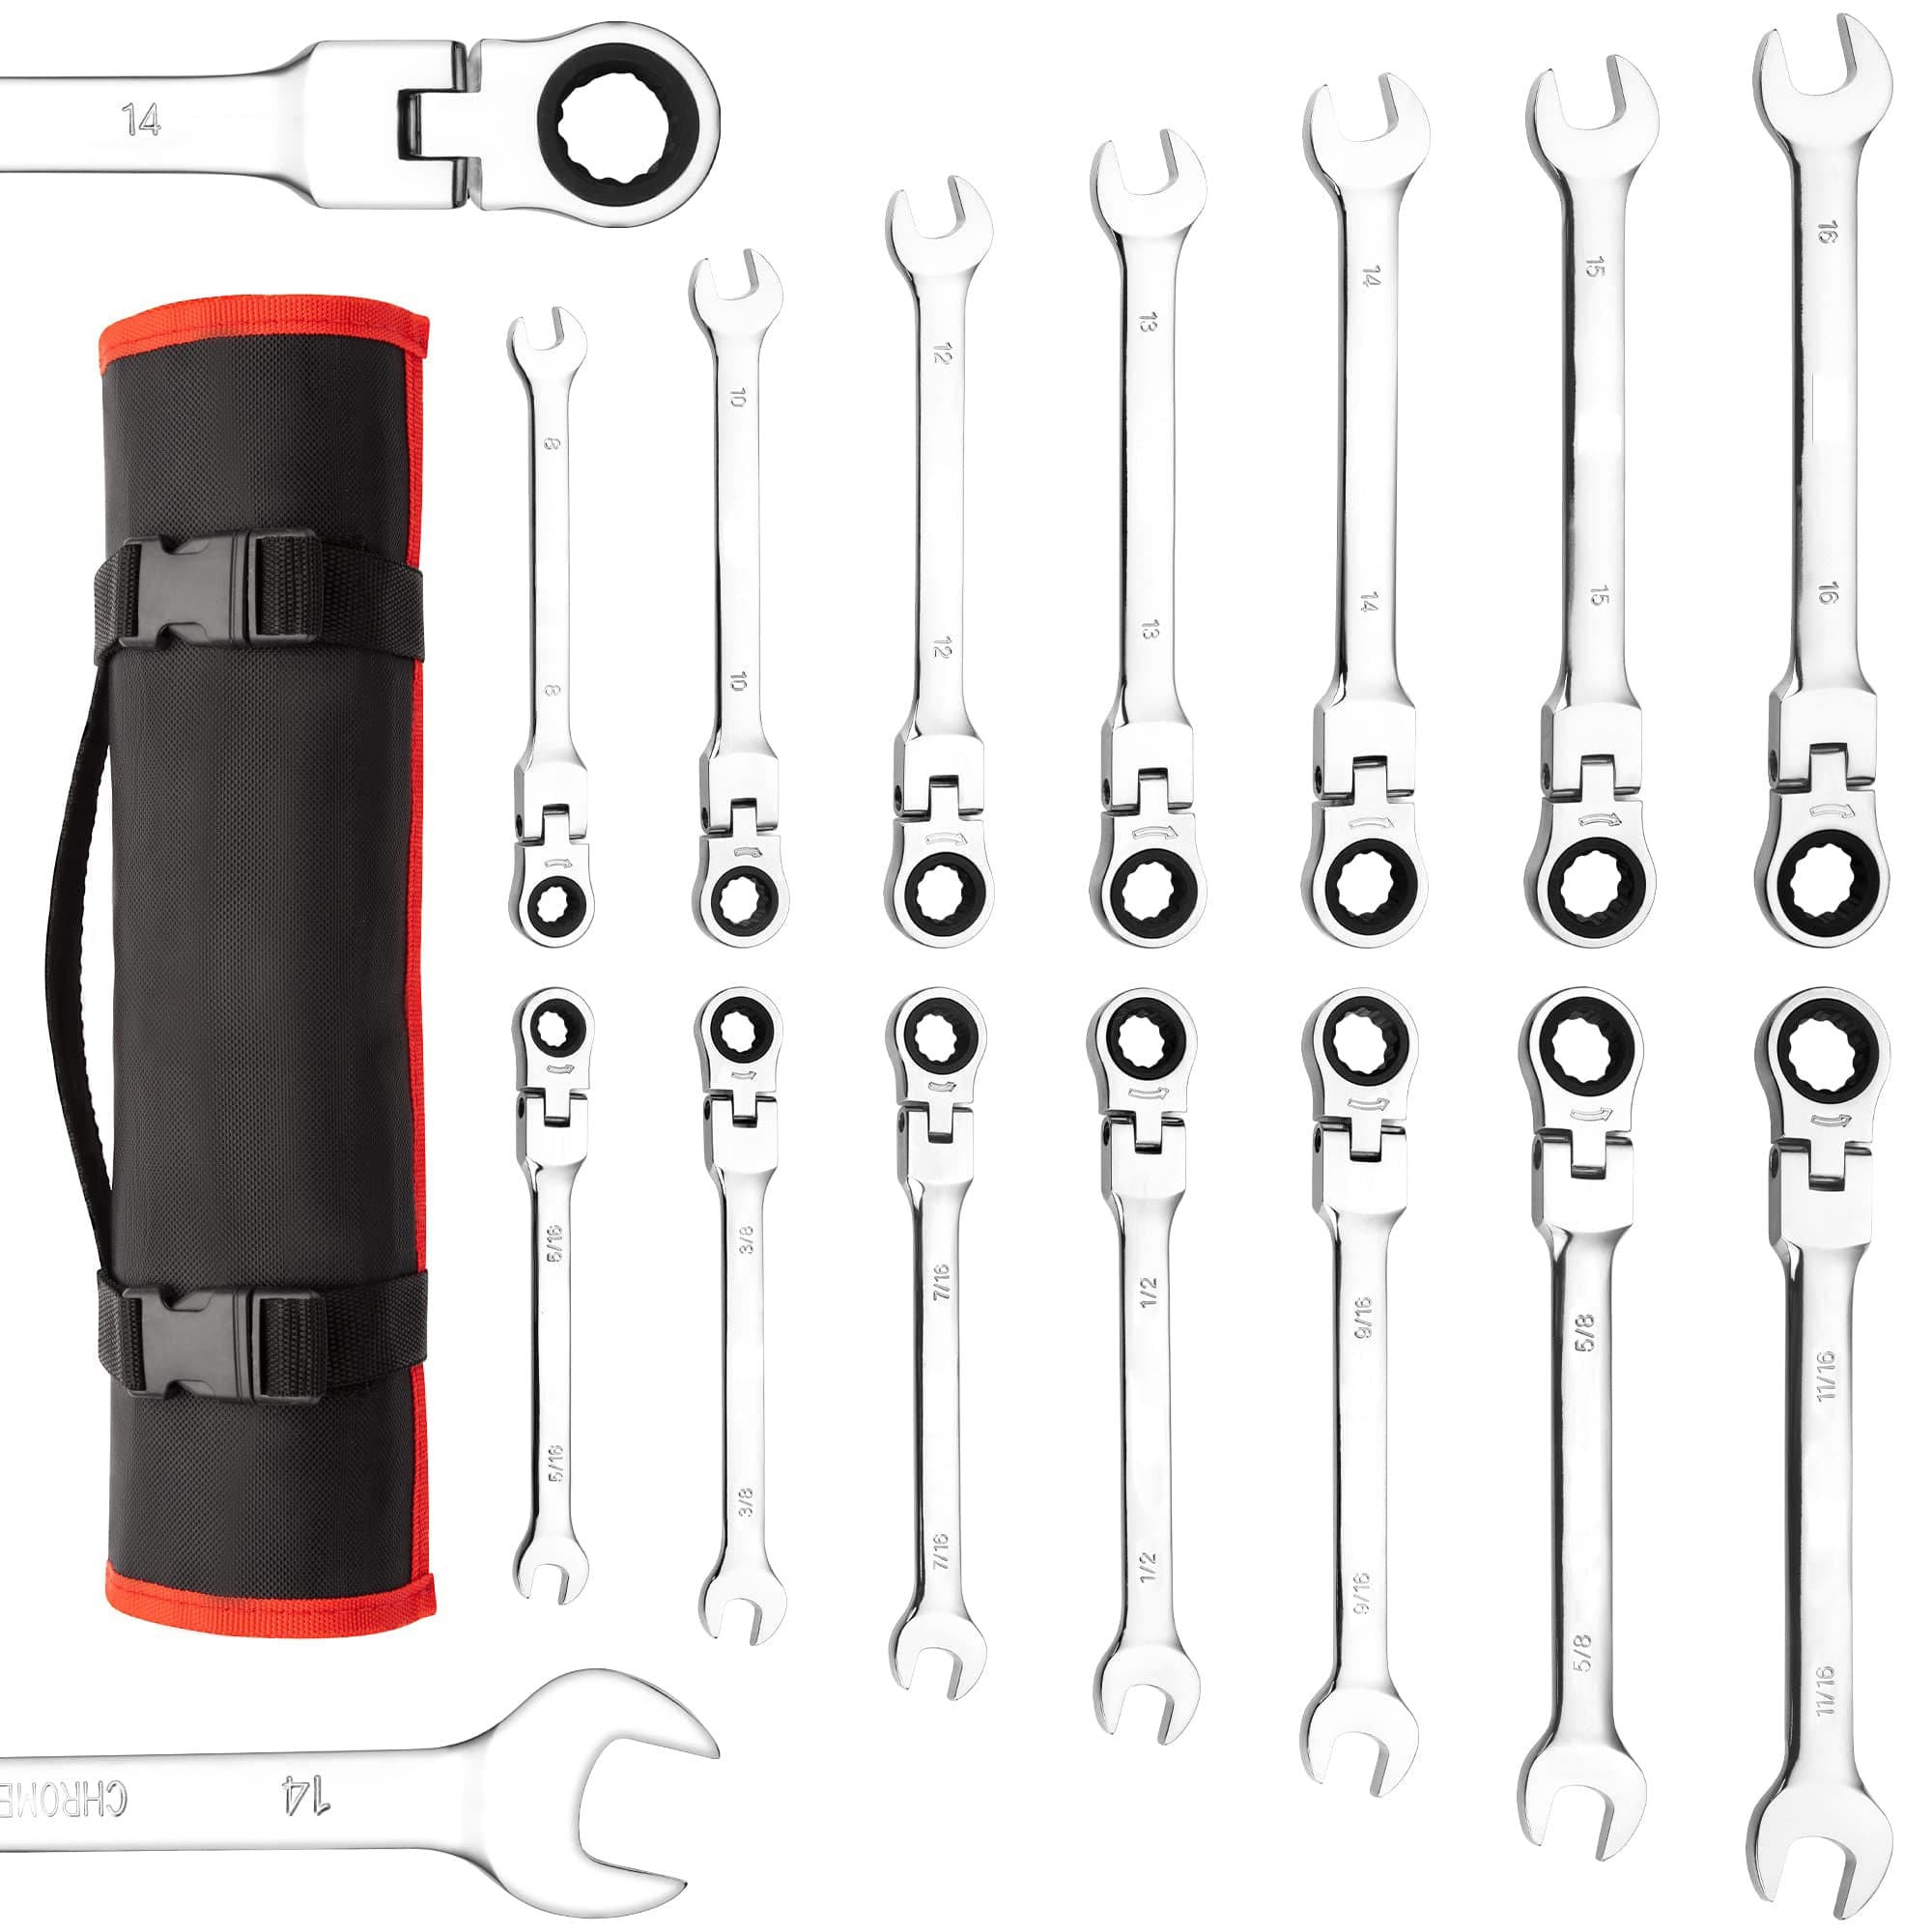 14pcs Flex-Head Ratchet Combination Wrench Set, SAE & Metric